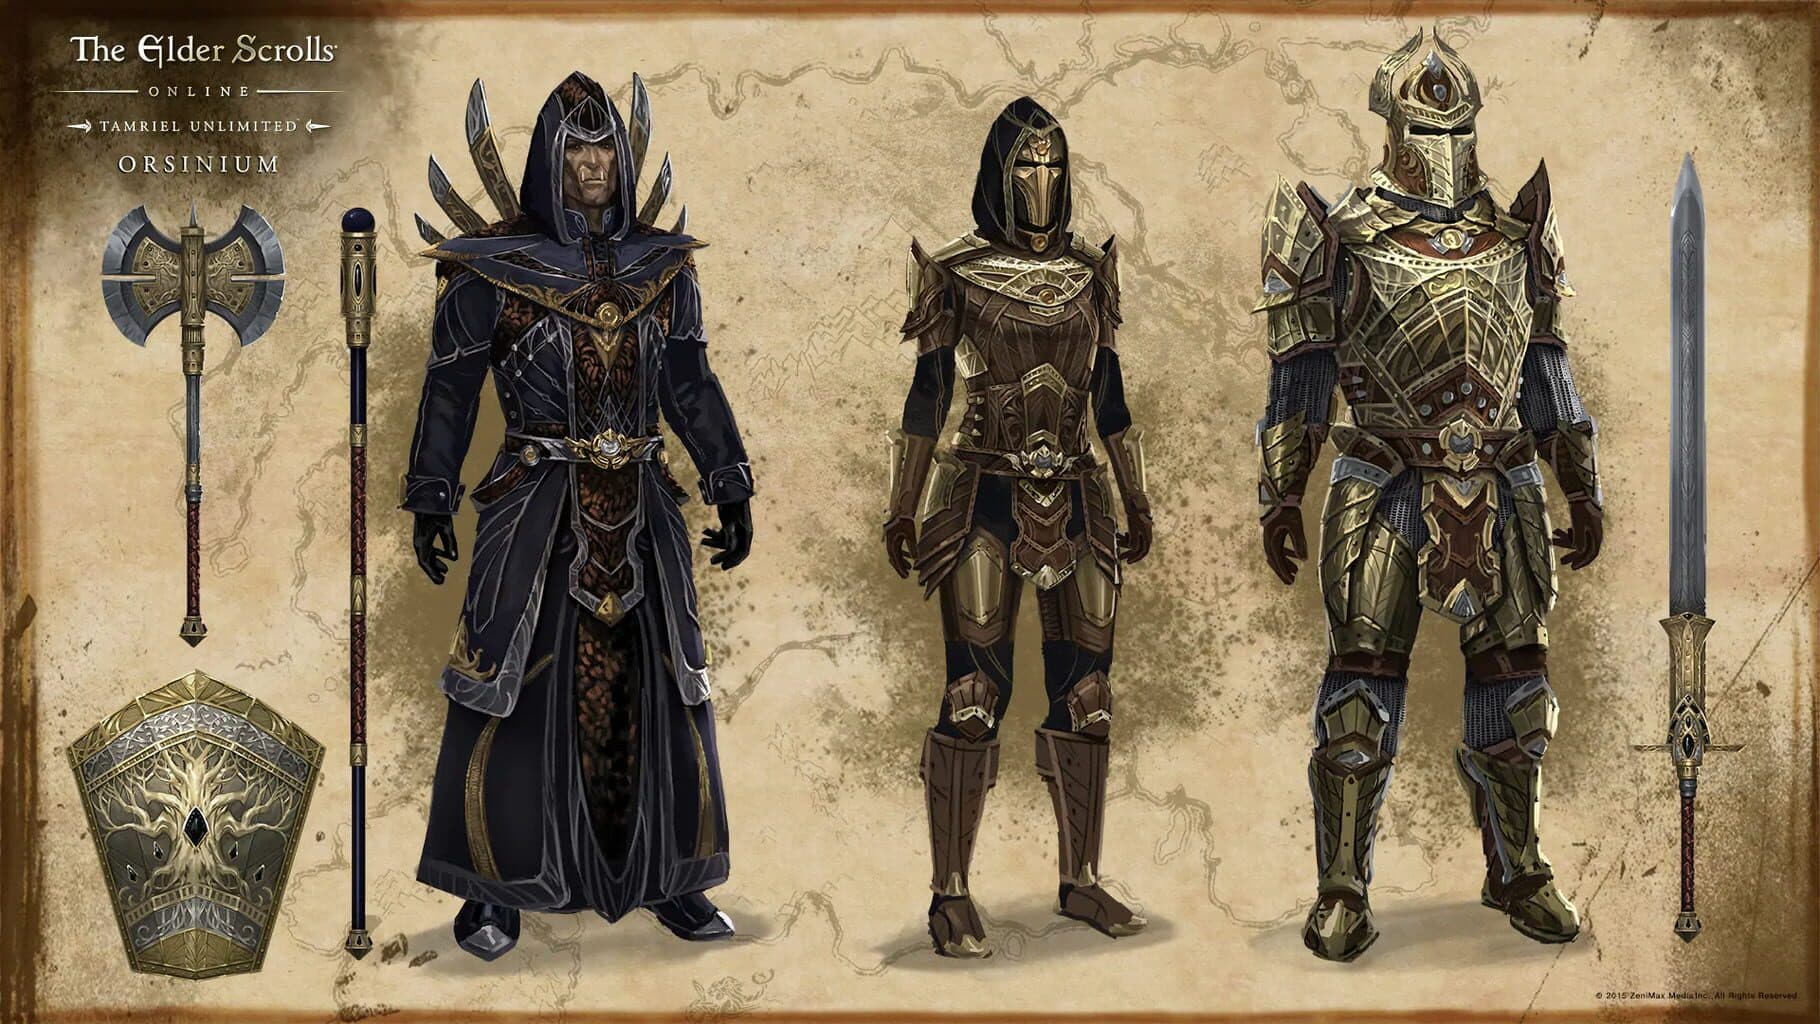 The Elder Scrolls Online: Orsinium Image